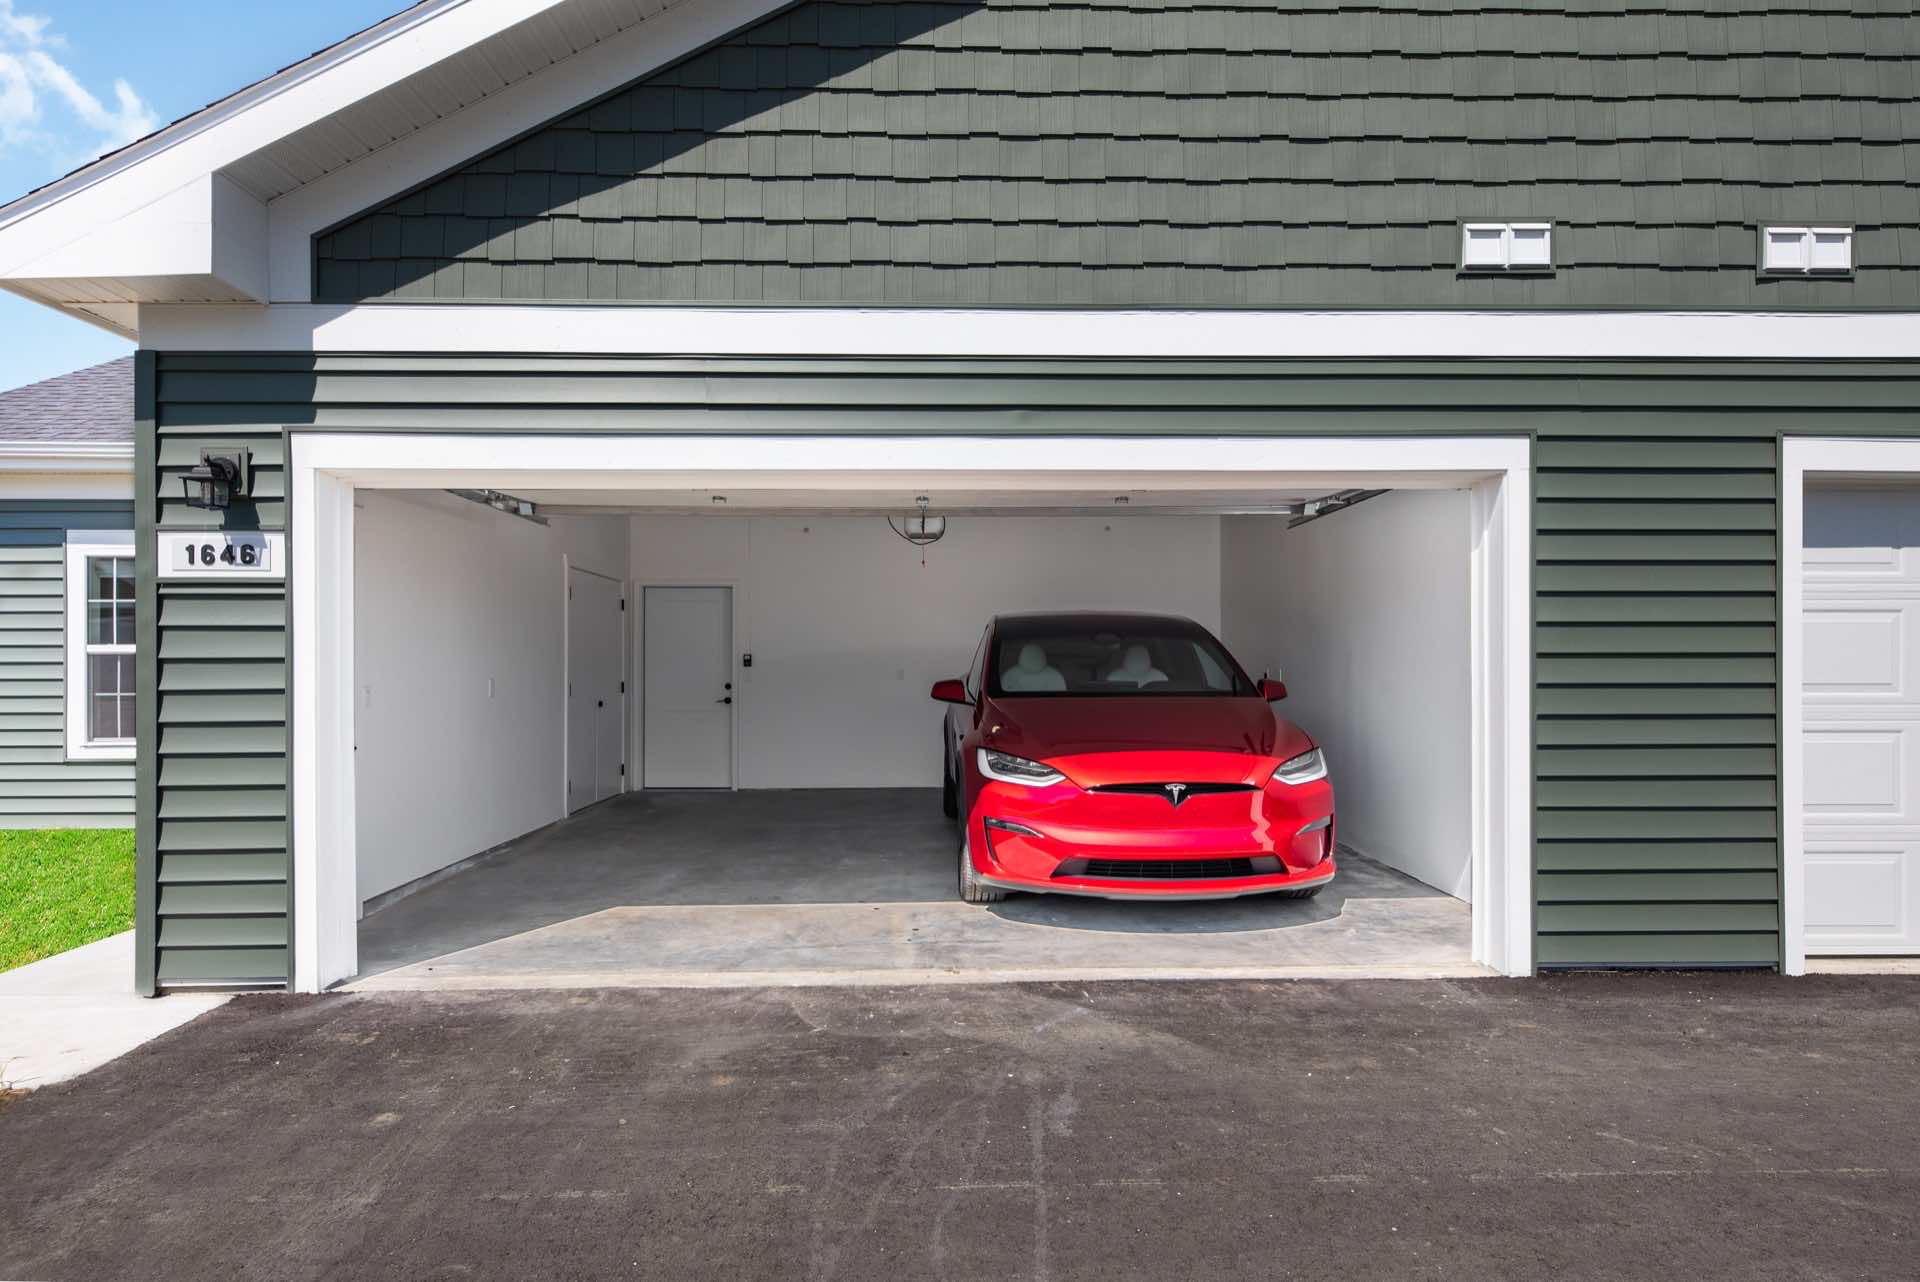 Car sitting in garage